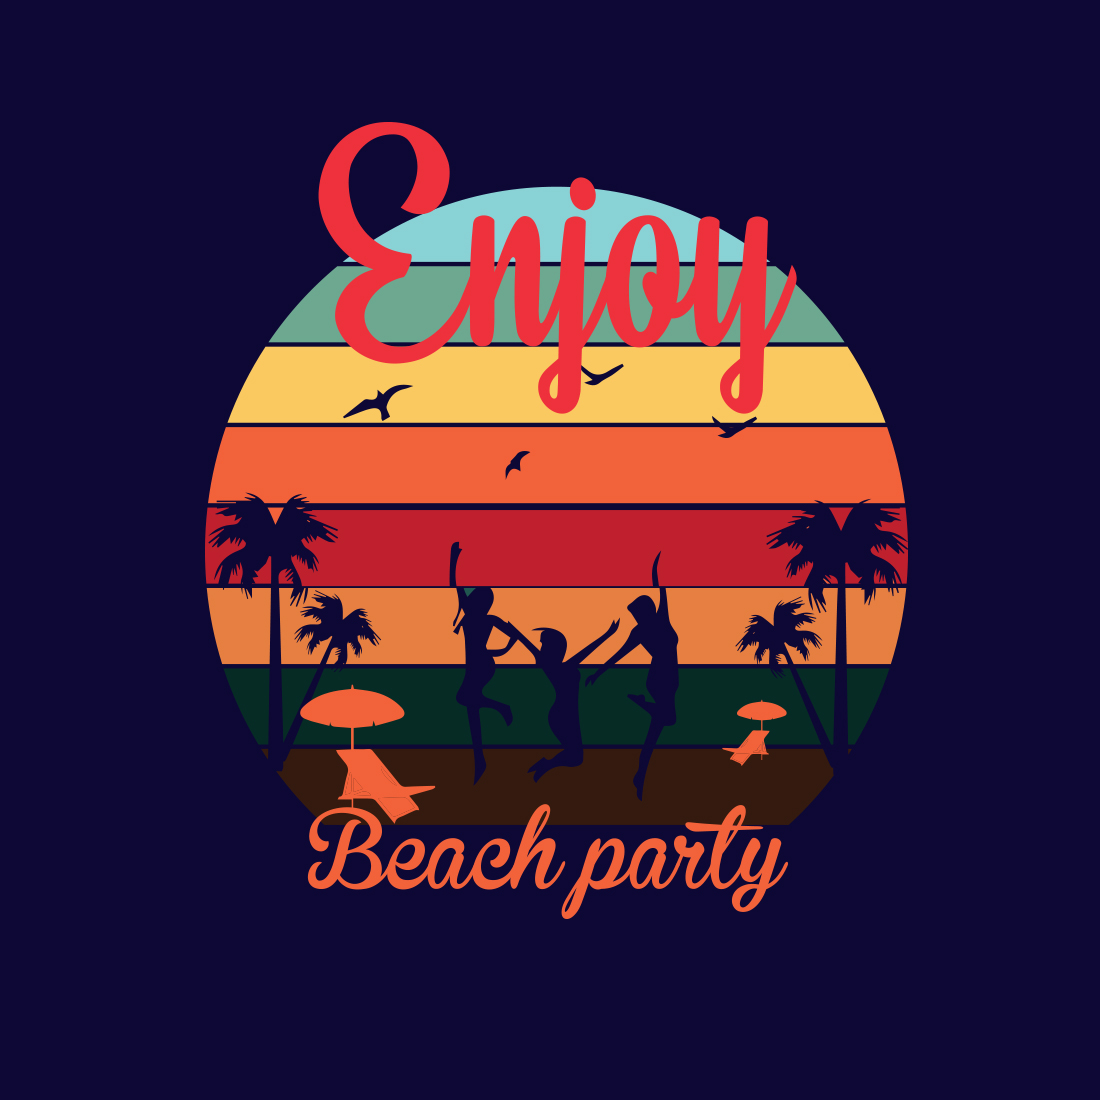 Enjoy Beach party t shirt design preview image.